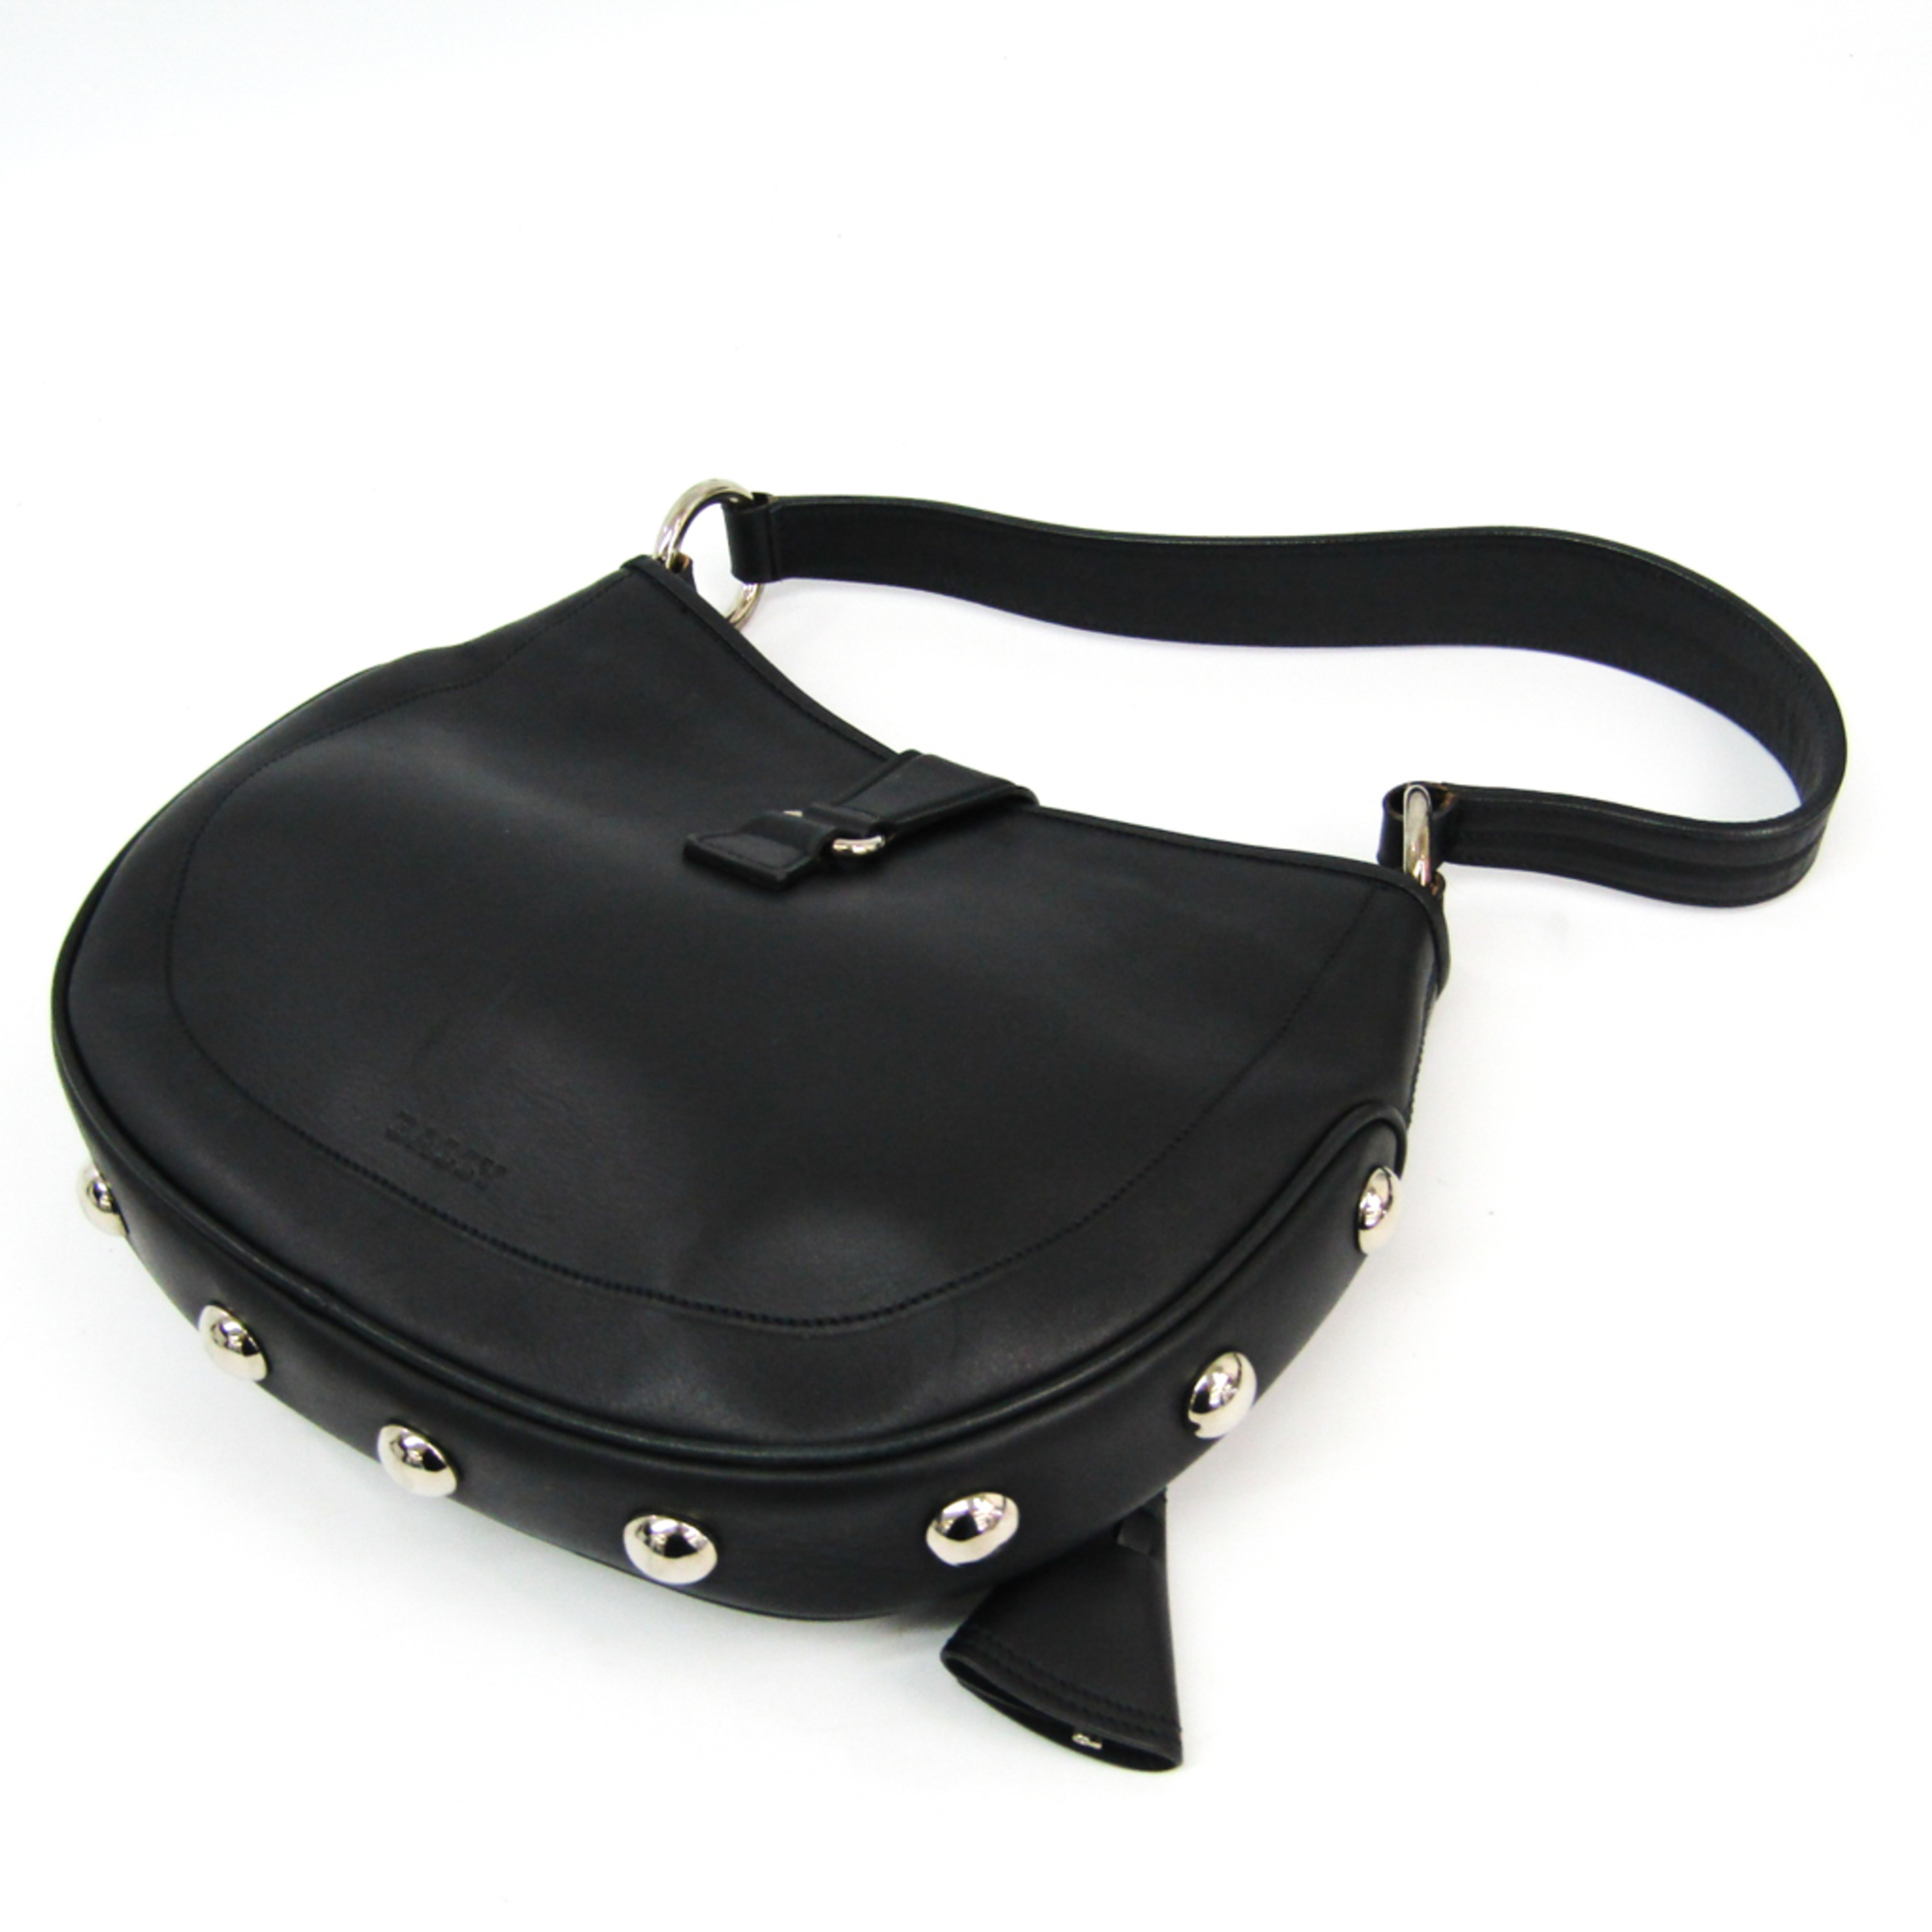 Bally COROZAR Women's Leather Shoulder Bag Black